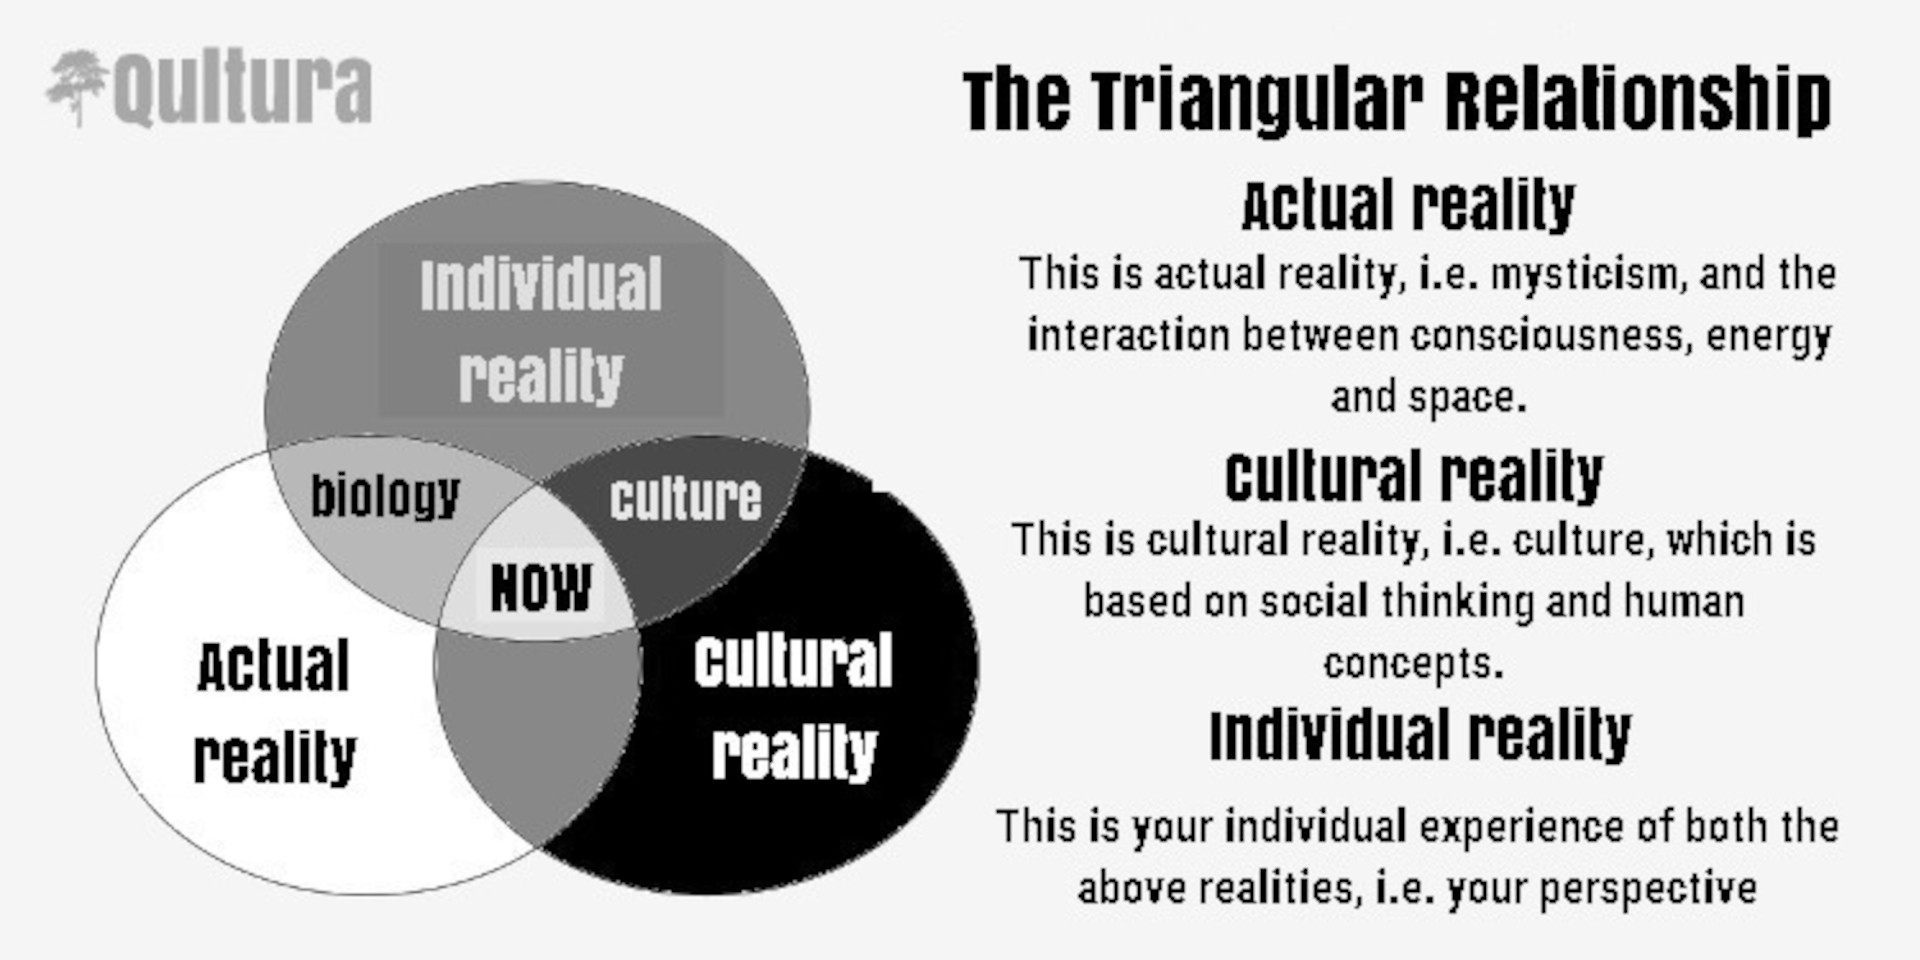 The Triangular Relationship